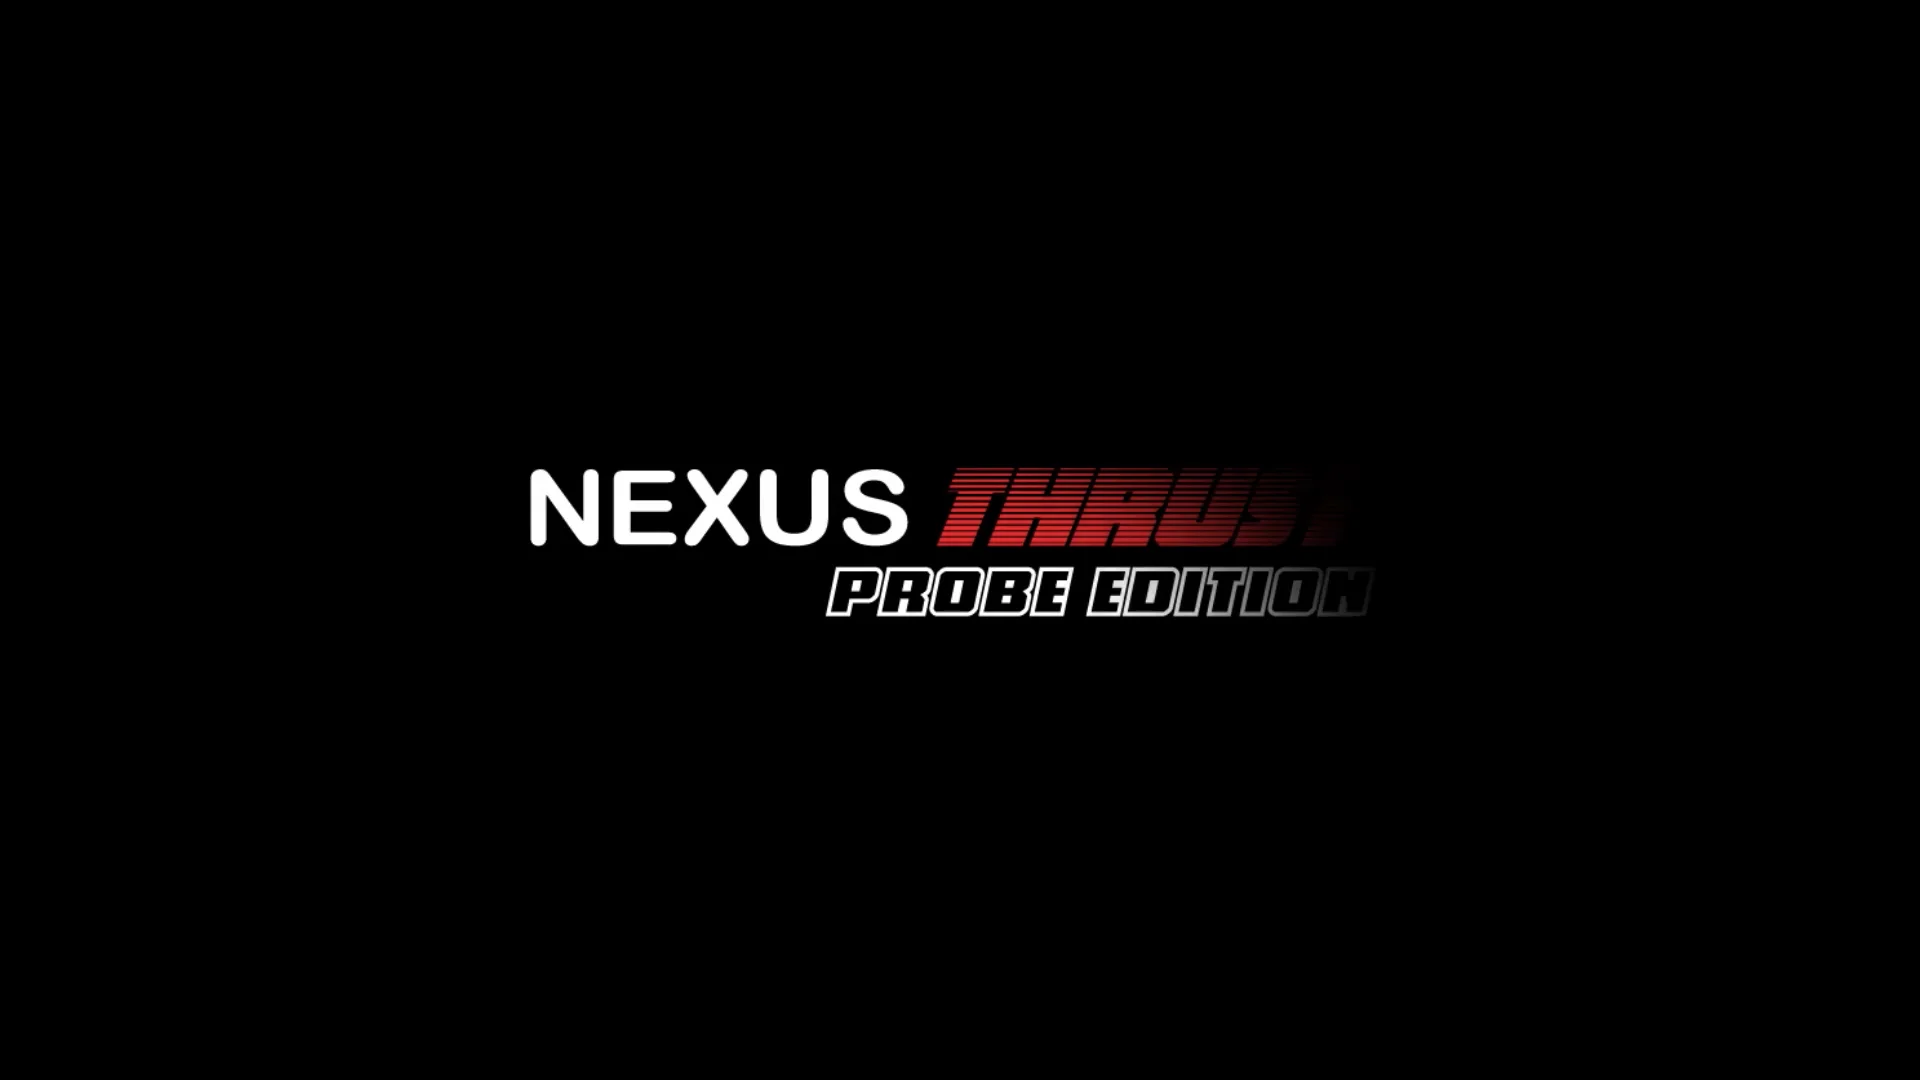 Nexus | Thrust Anal Thrusting - Prostate Probe | Μασάζ Προστάτη | ola4u.gr  - Sex Shop on Vimeo